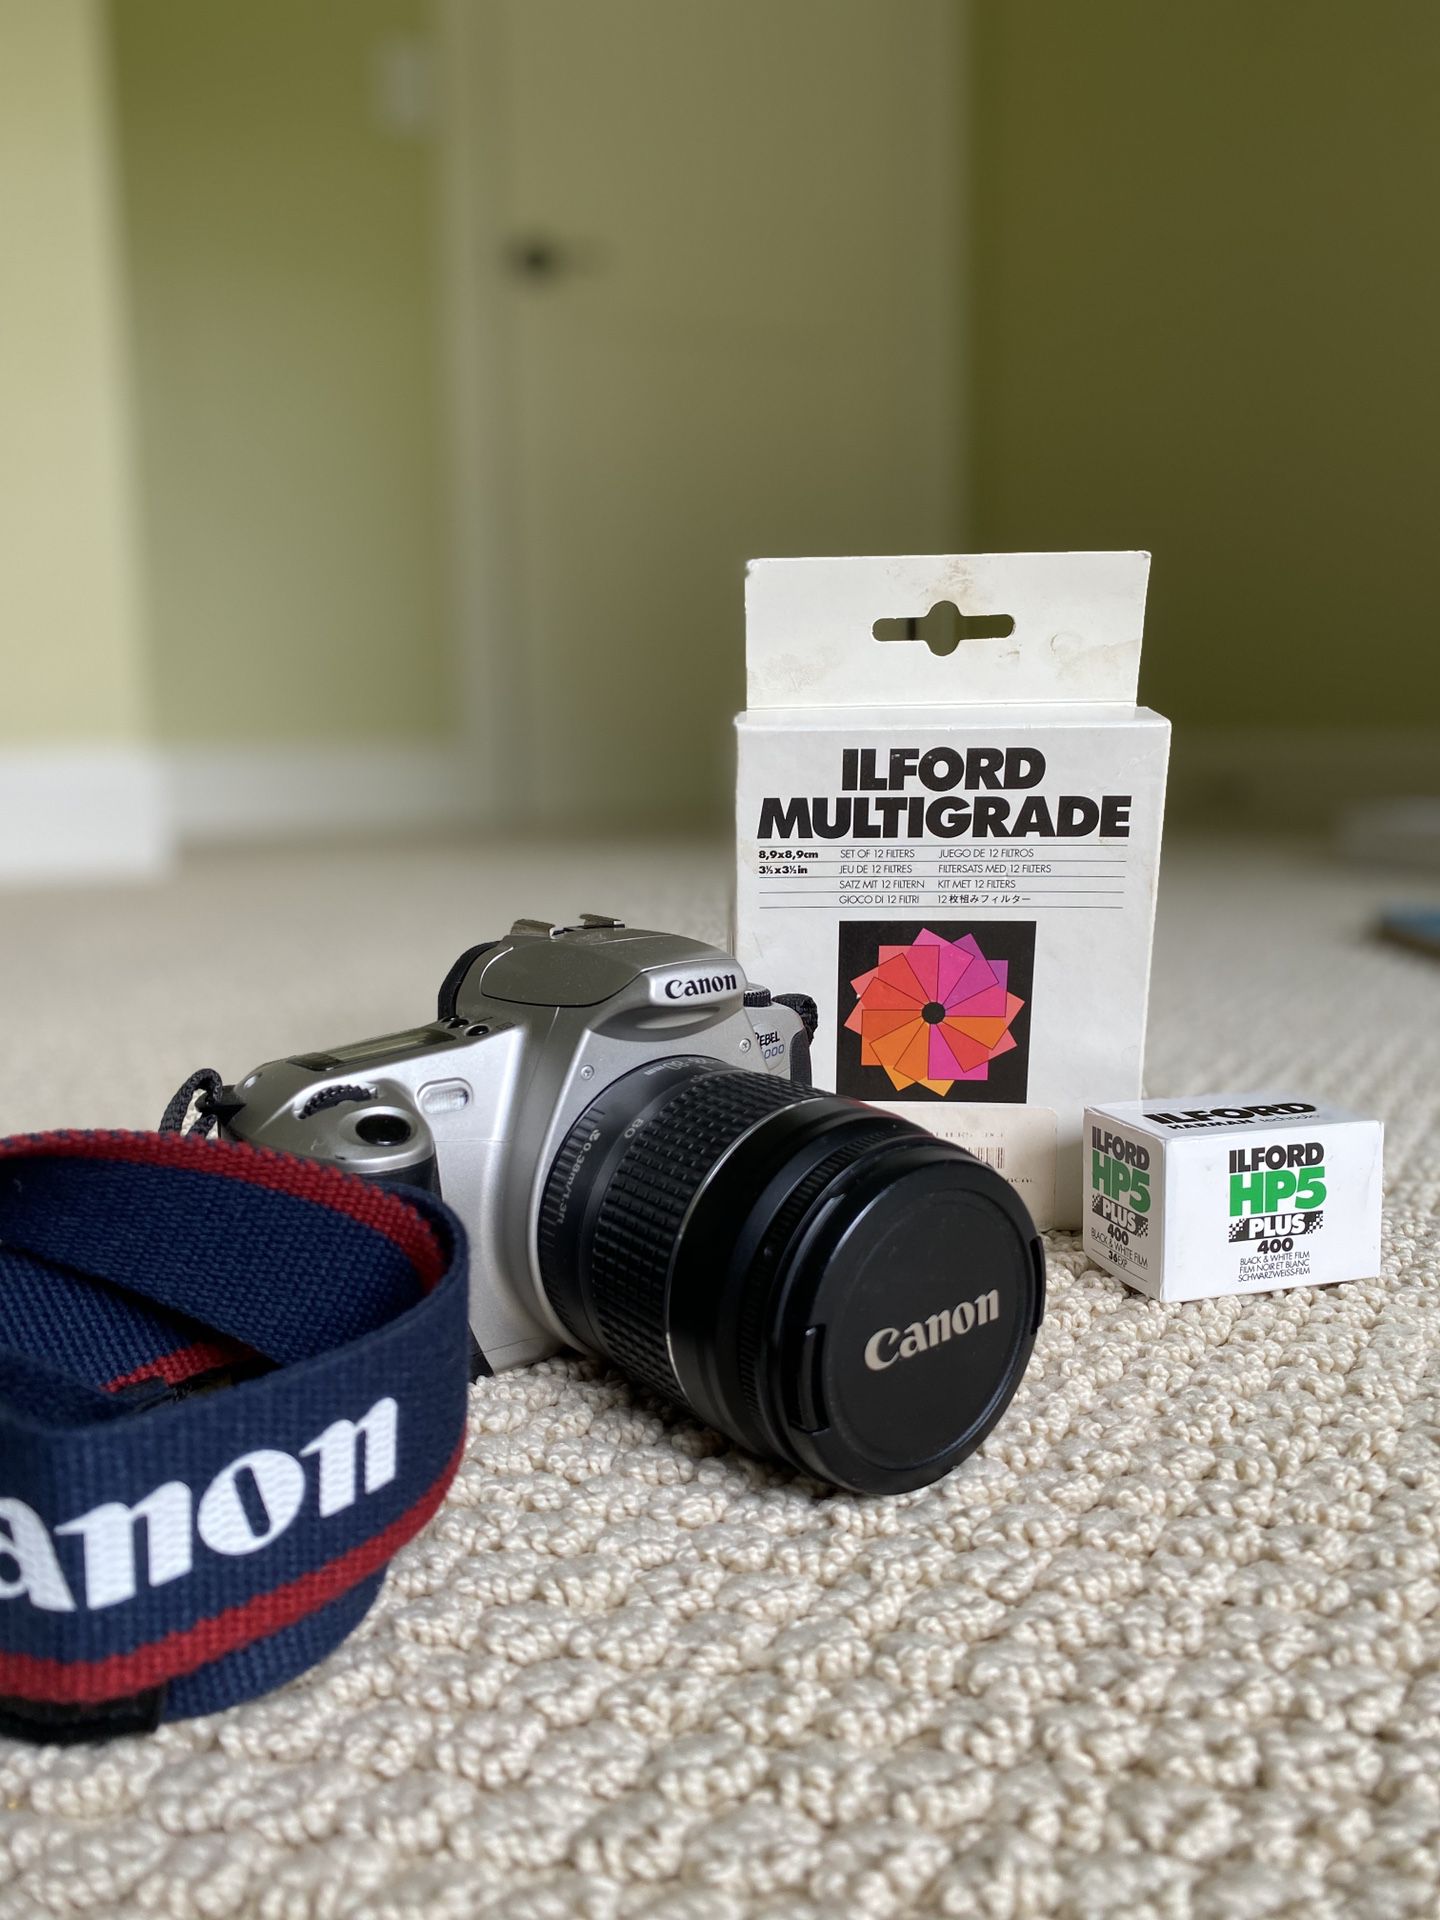 Canon EOS Rebel 2000 SLR Camera, 28-80mm lens, and filters/film - Photographer Starter Kit!